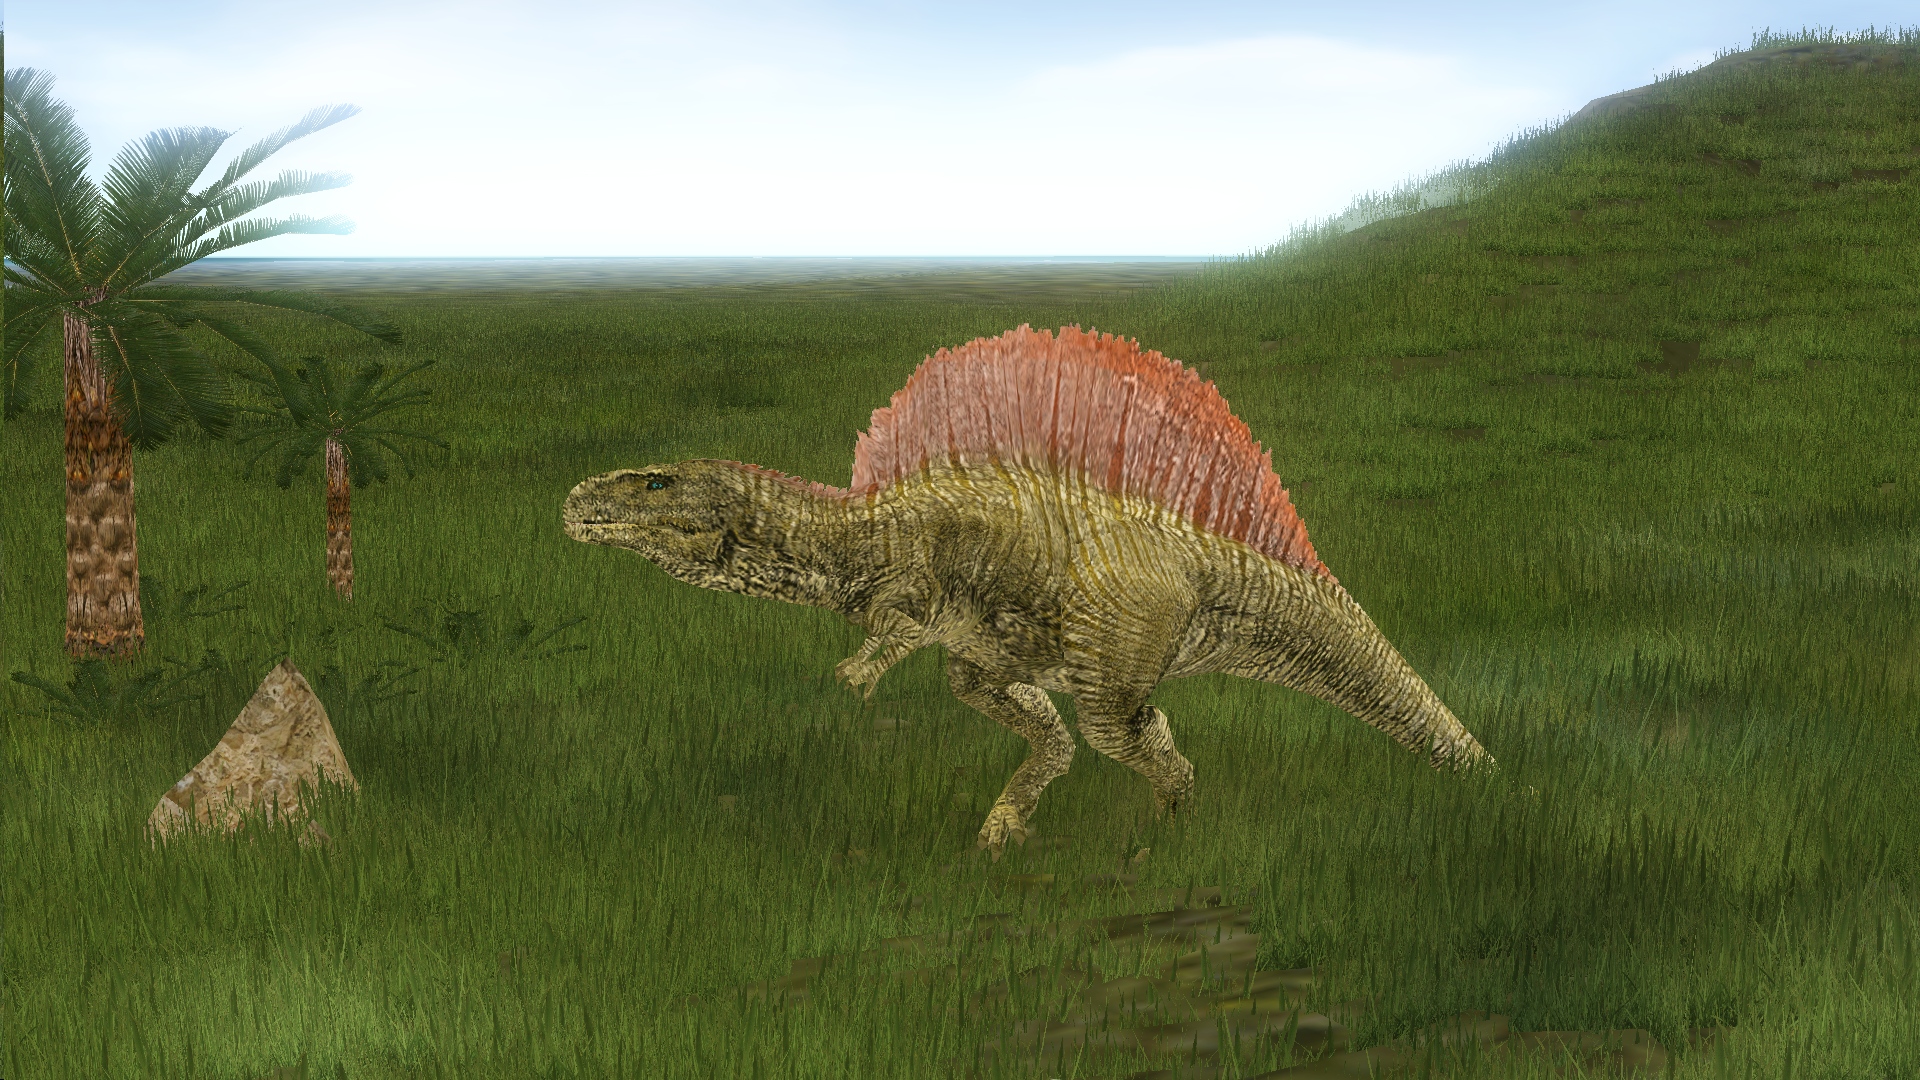 Спинозавры - spinosauridae - abcdef.wiki